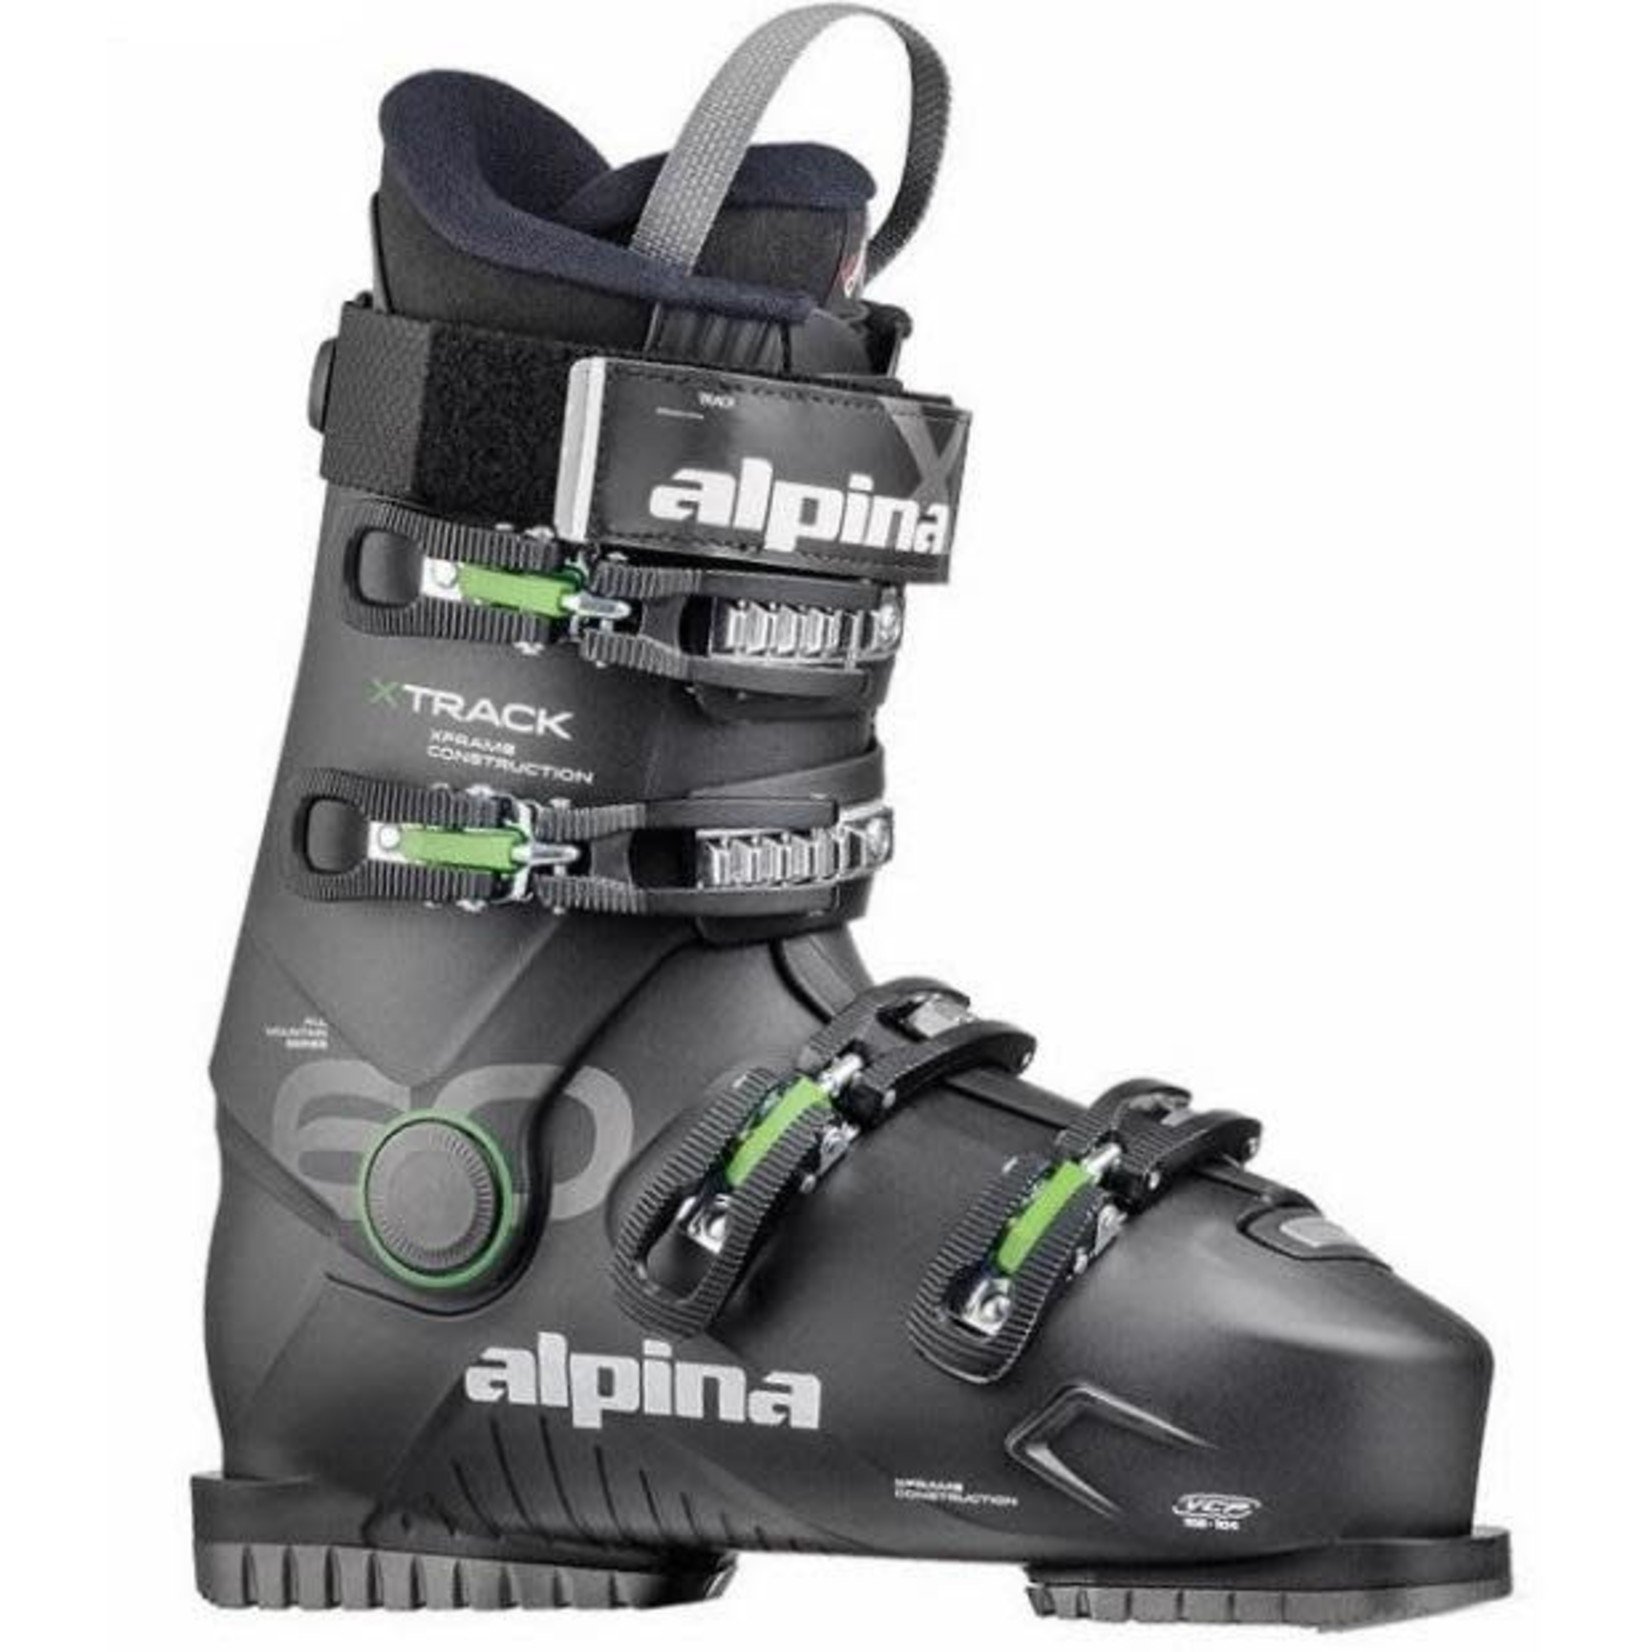 Alpina Bottes Ski Alpin X-Track 60 Noir/Vert